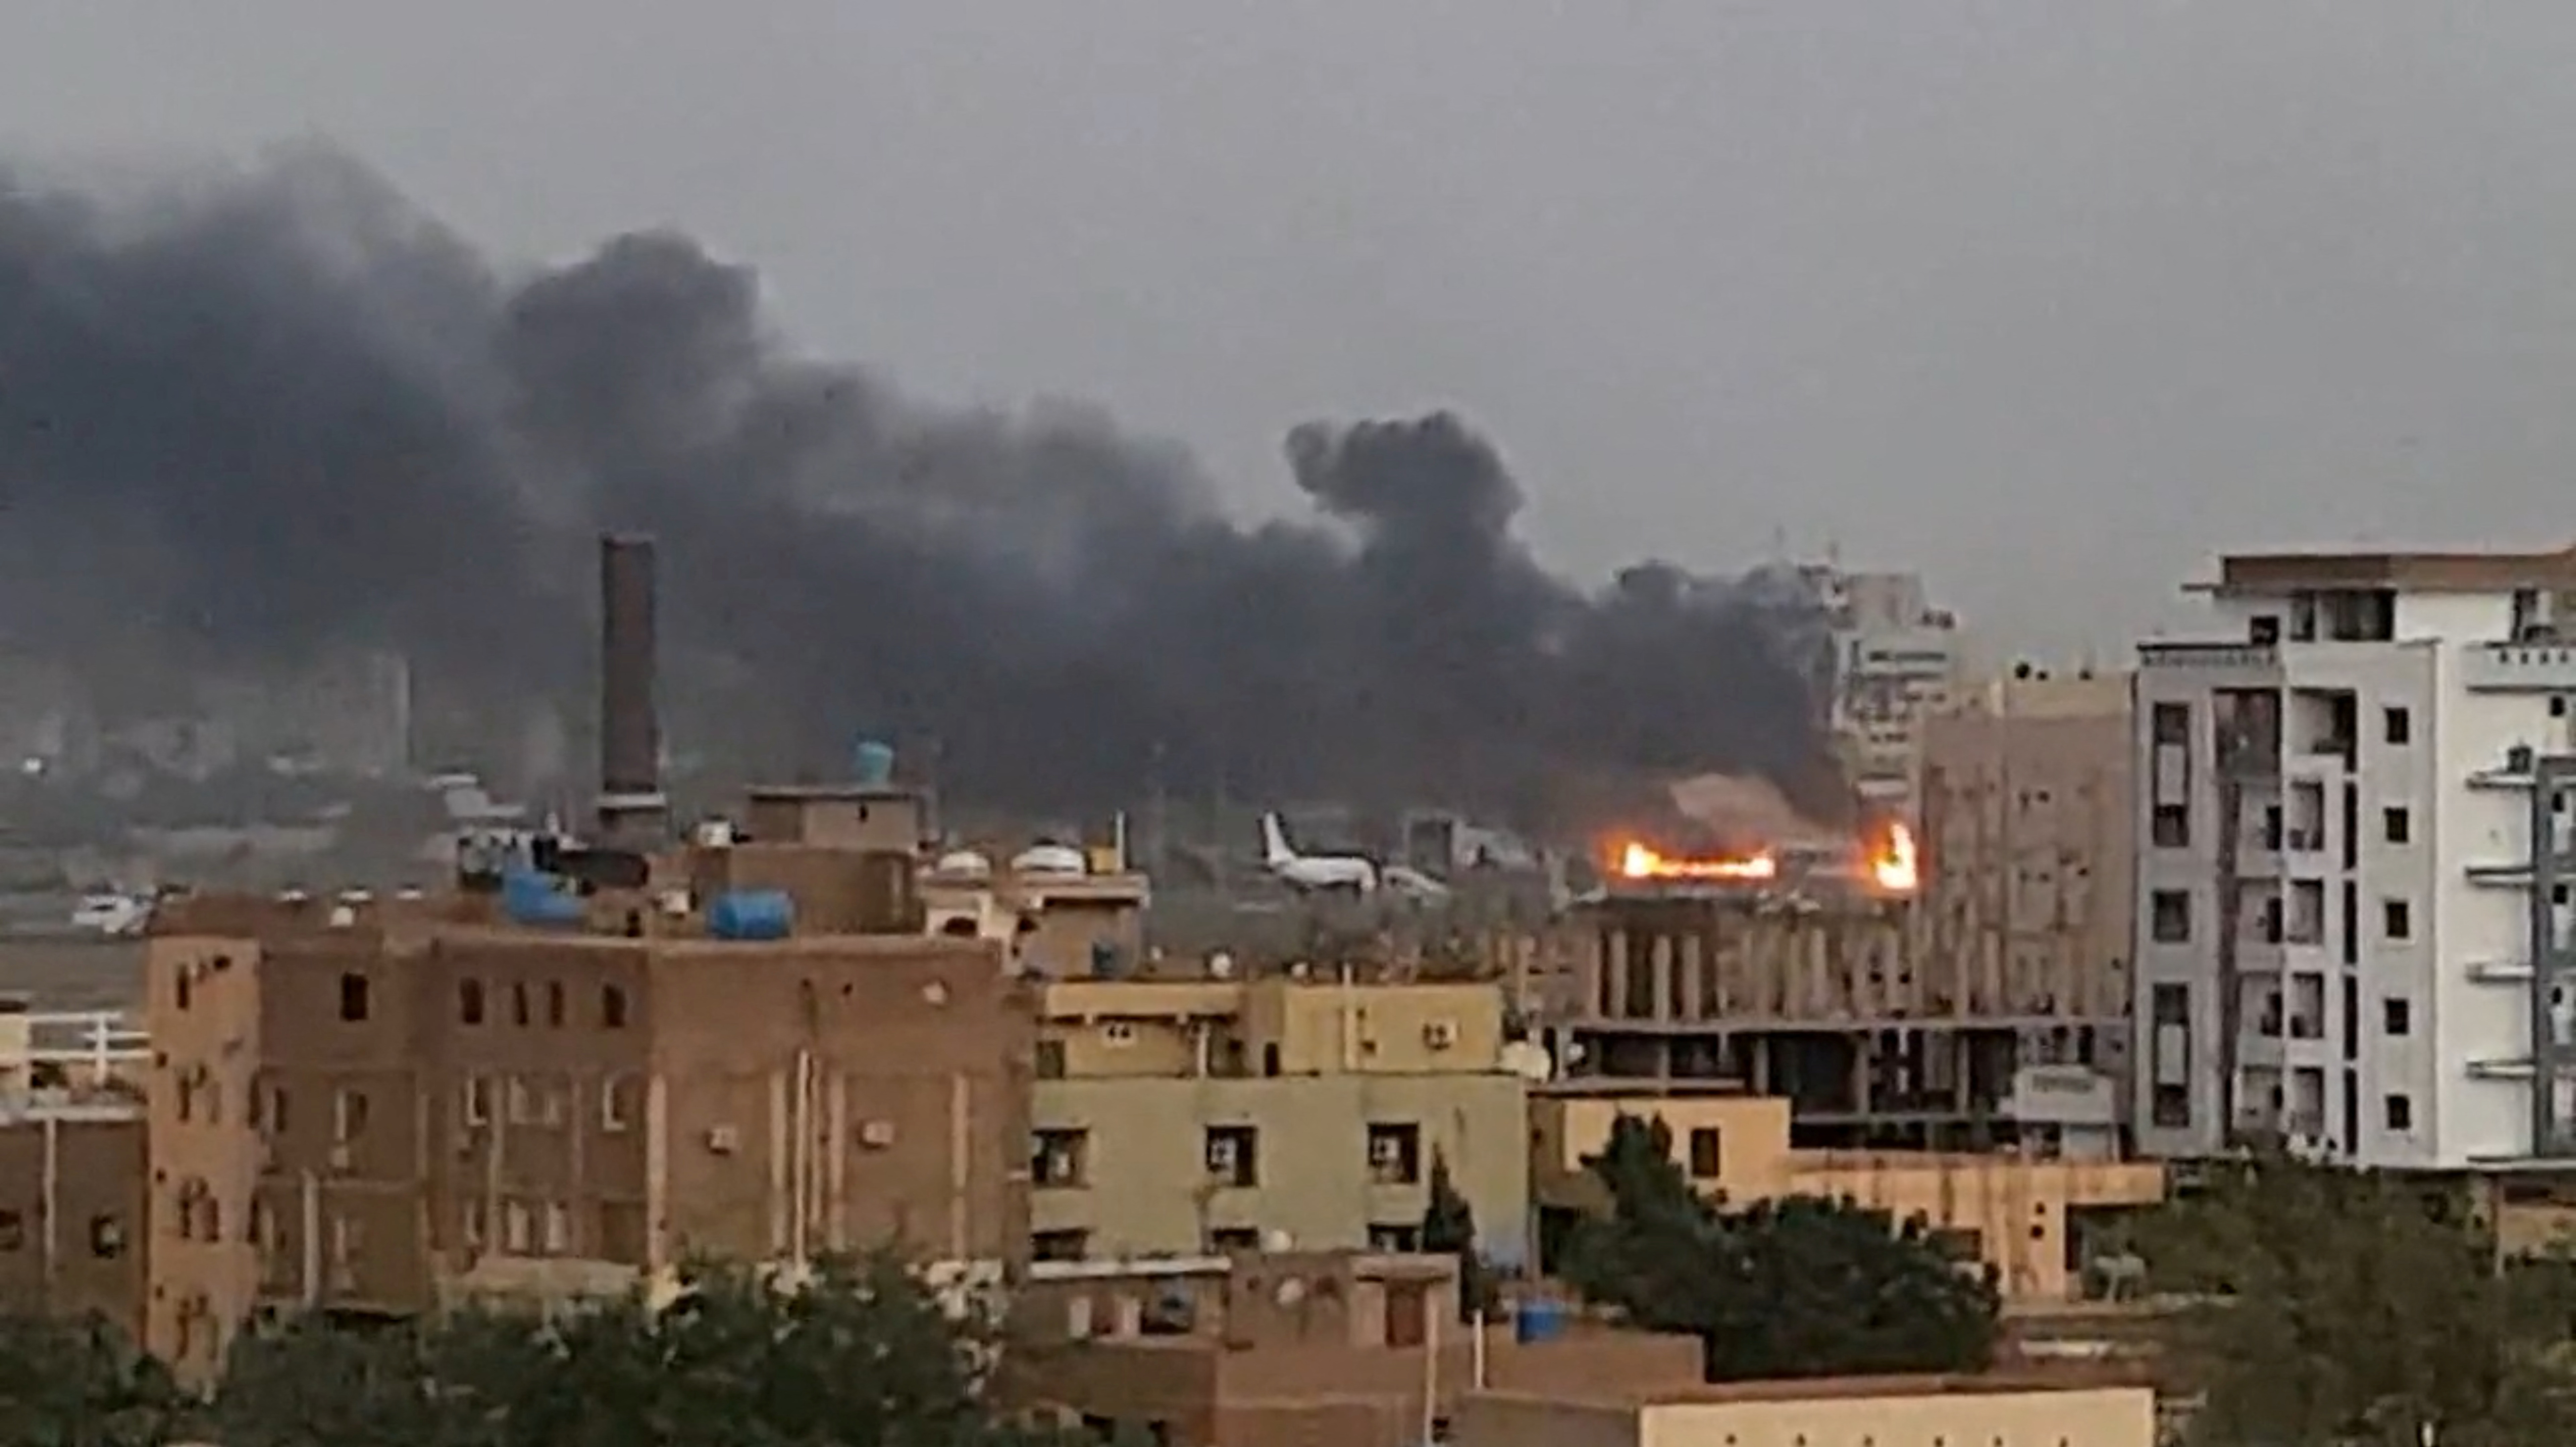 Smoke rises from the tarmac of Khartoum International Airport as a fire burns, in Khartoum